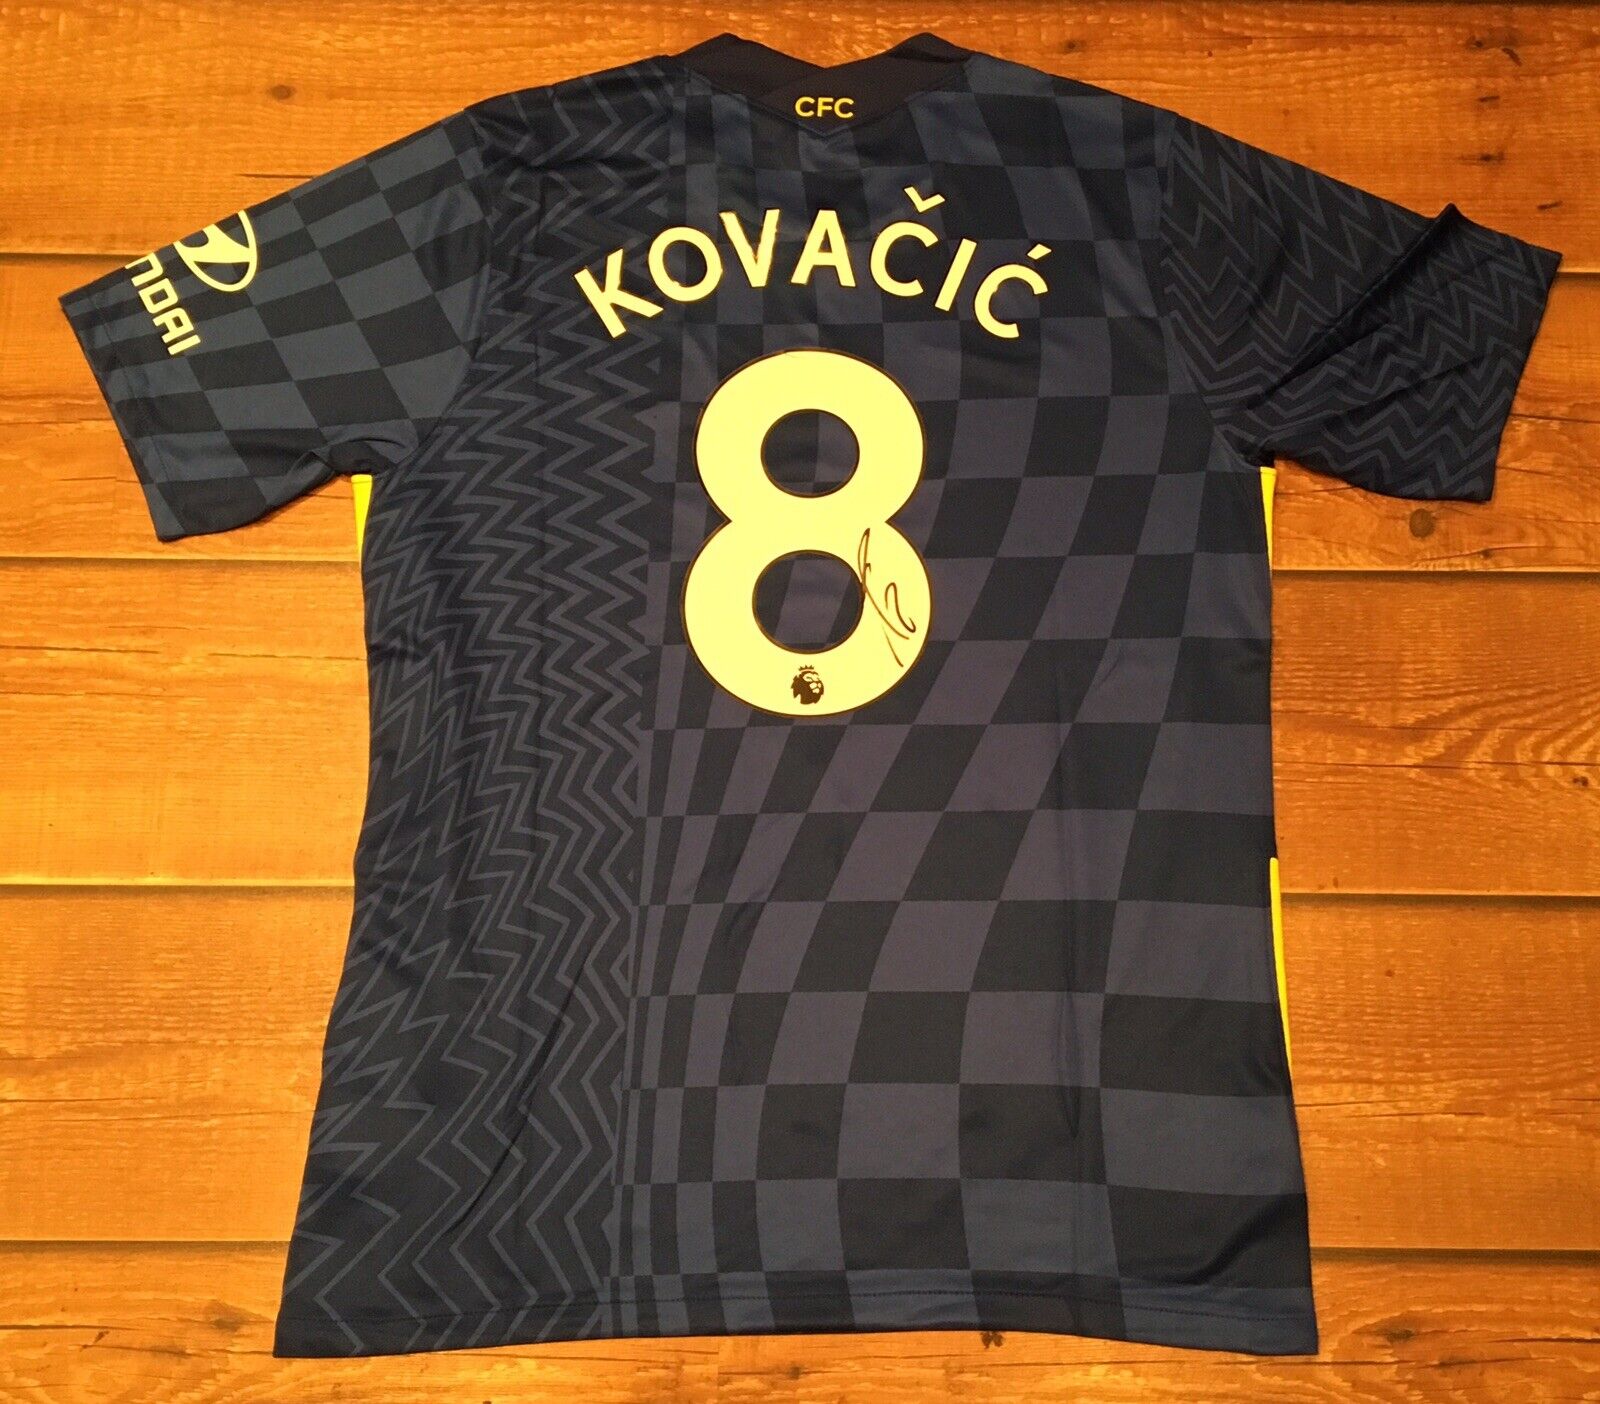 MATEO KOVACIC - Signed CHELSEA FC Shirt Le Croatia 2021 new Large special price !! COA Premier